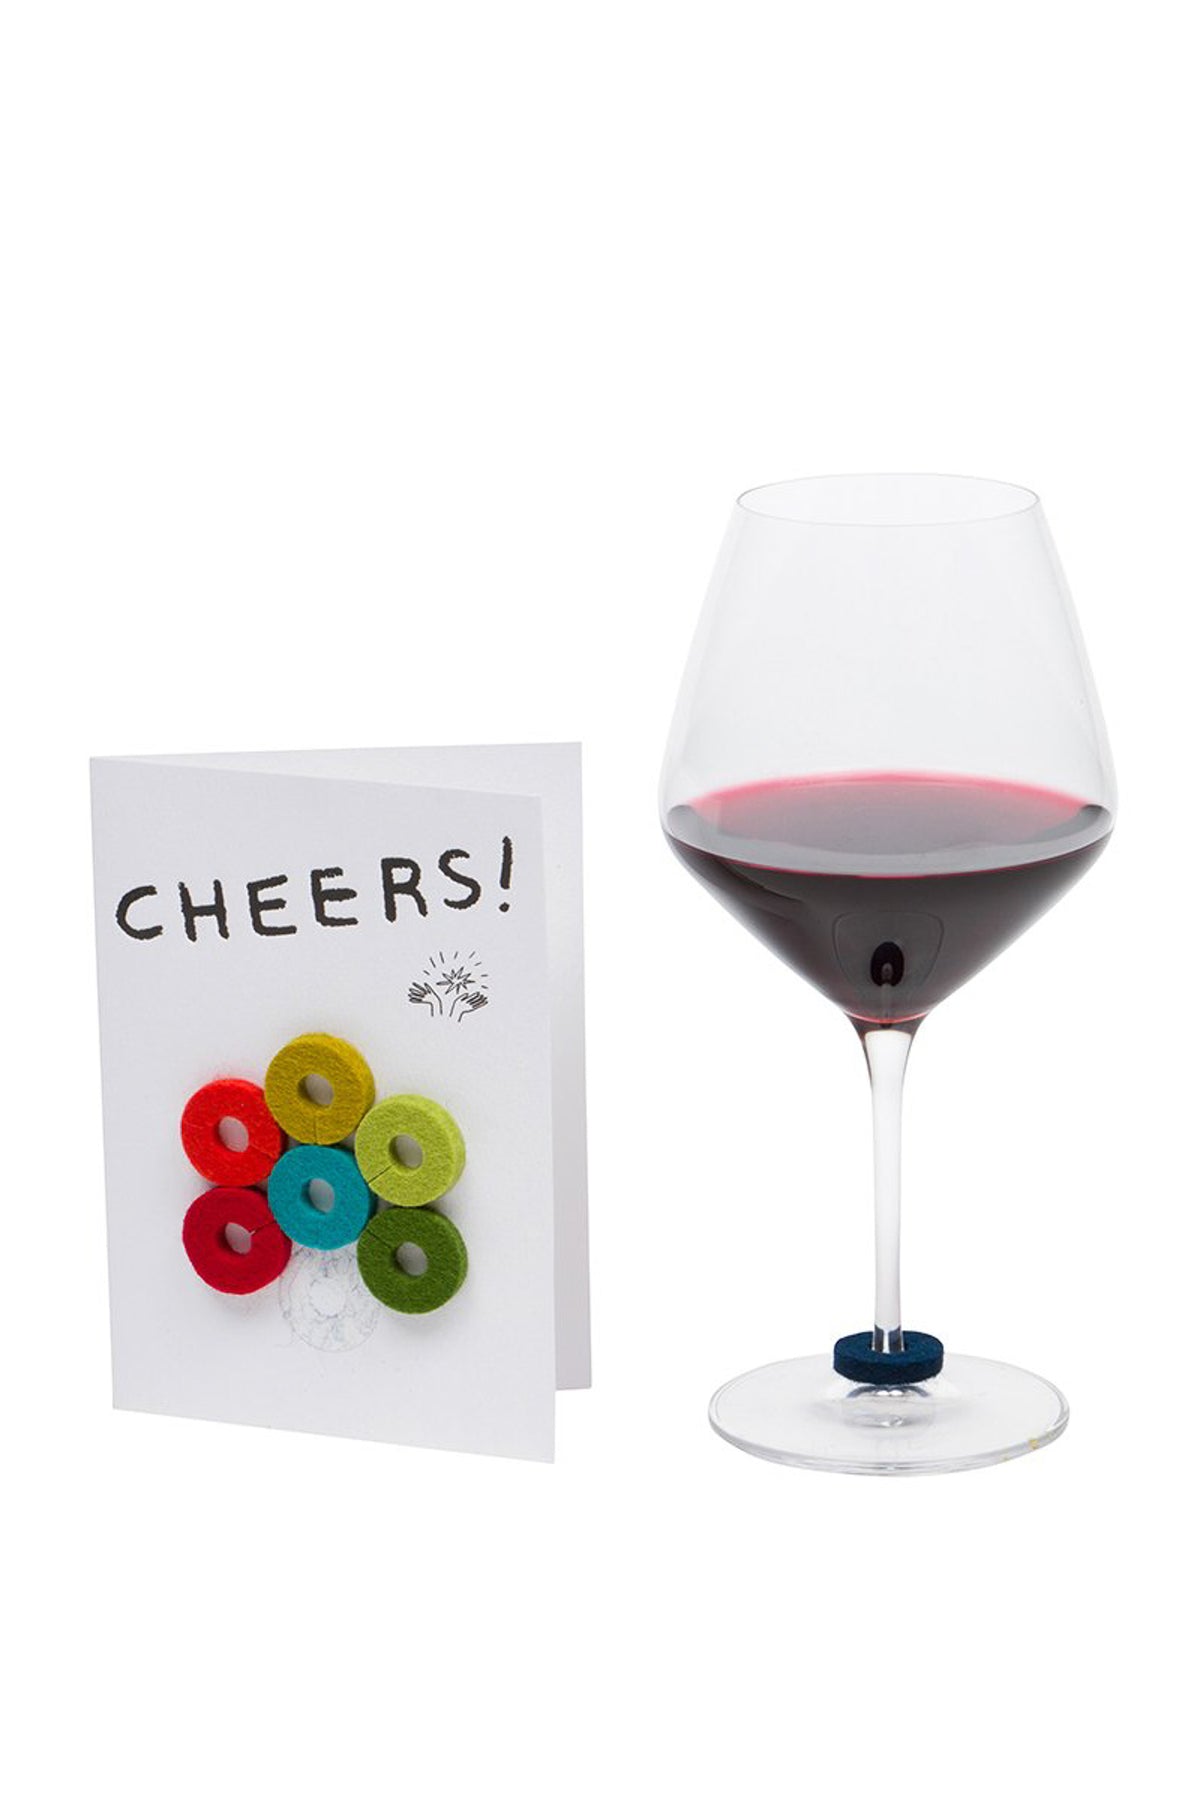 Graf Lantz Wine-Ote’s Felt Wine Marker Note Card